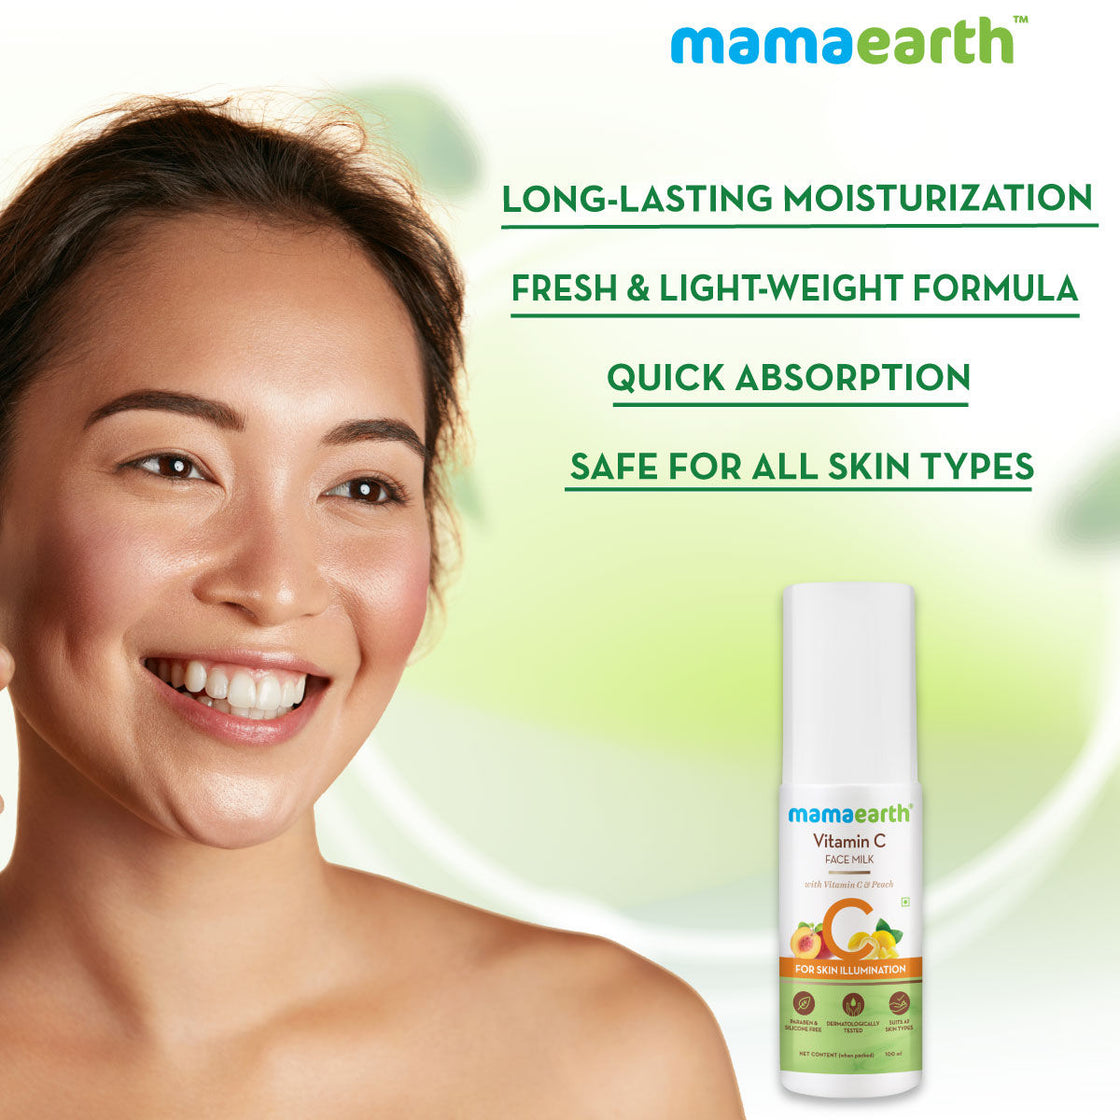 Mamaearth Vitamin C Face Milk With Vitamin C And Peach For Skin Illumination-2